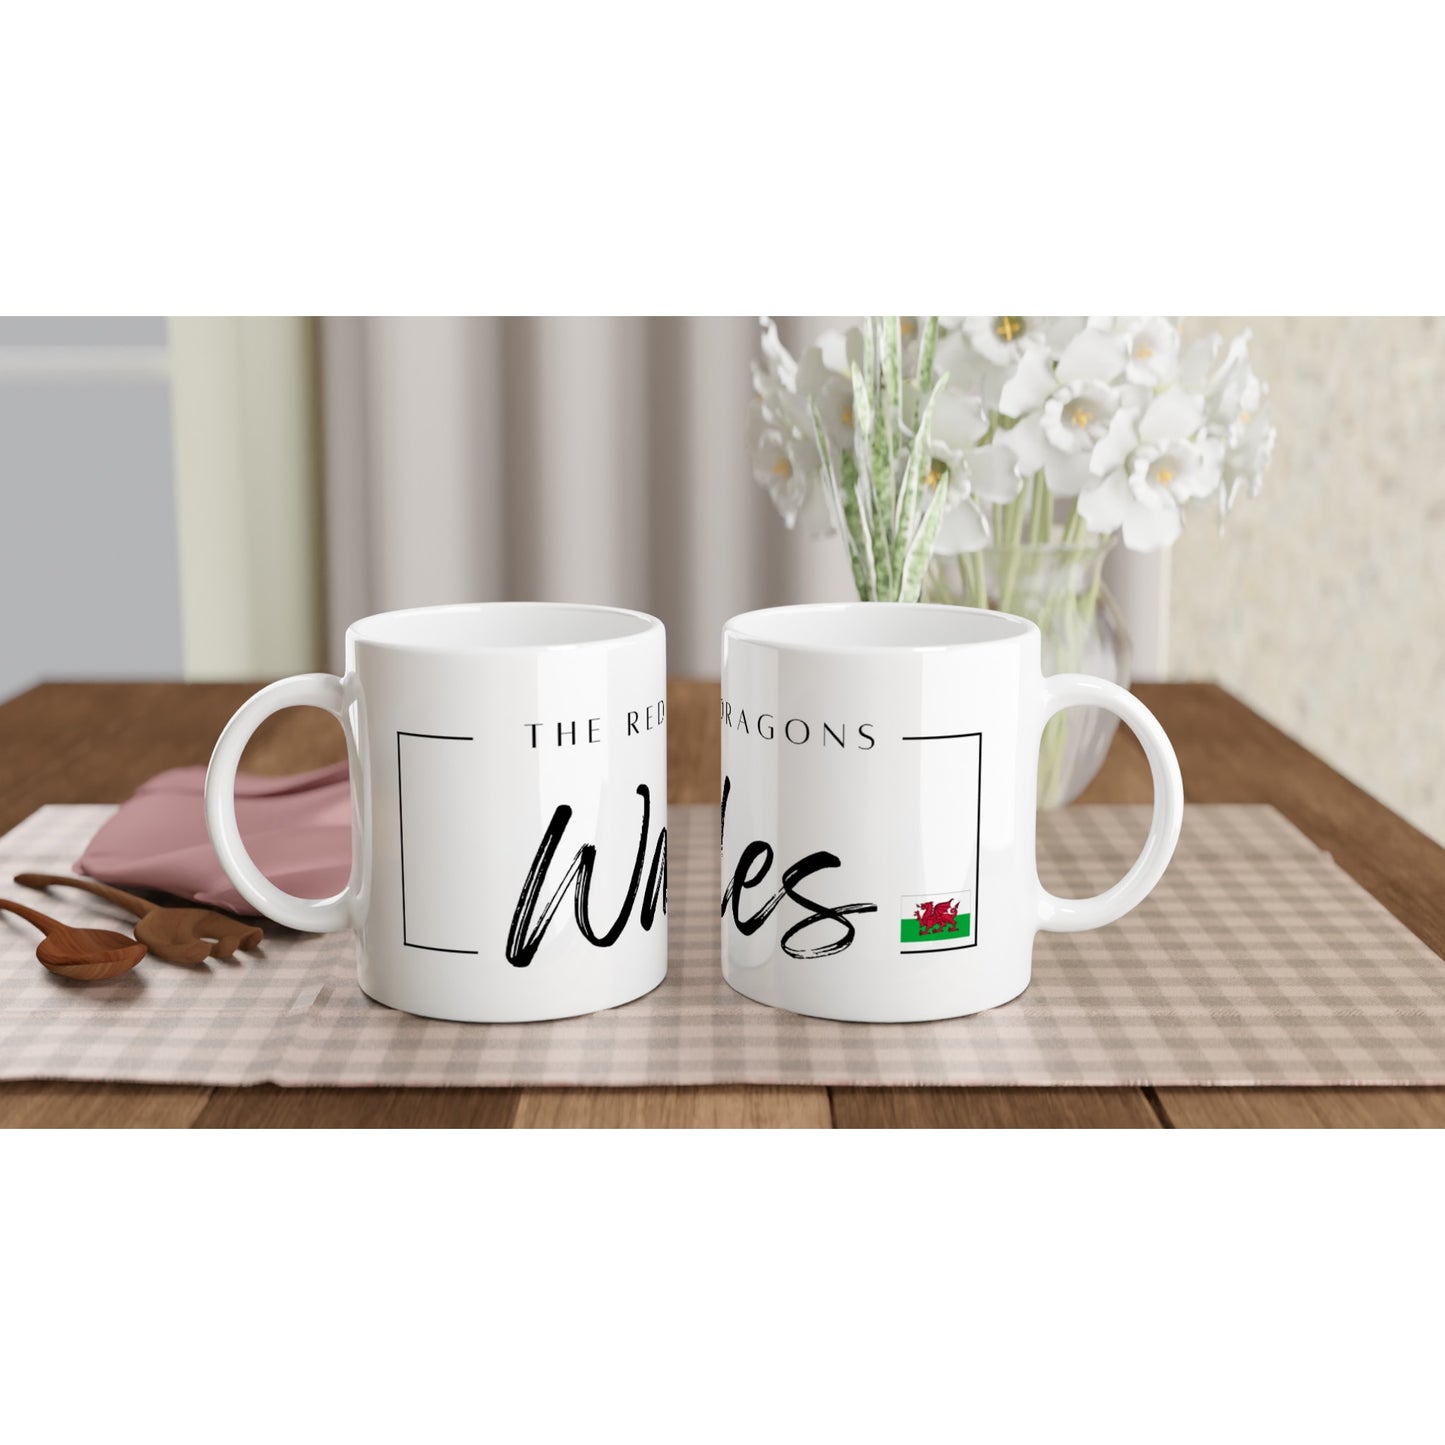 Wales - White 11oz Ceramic Mug